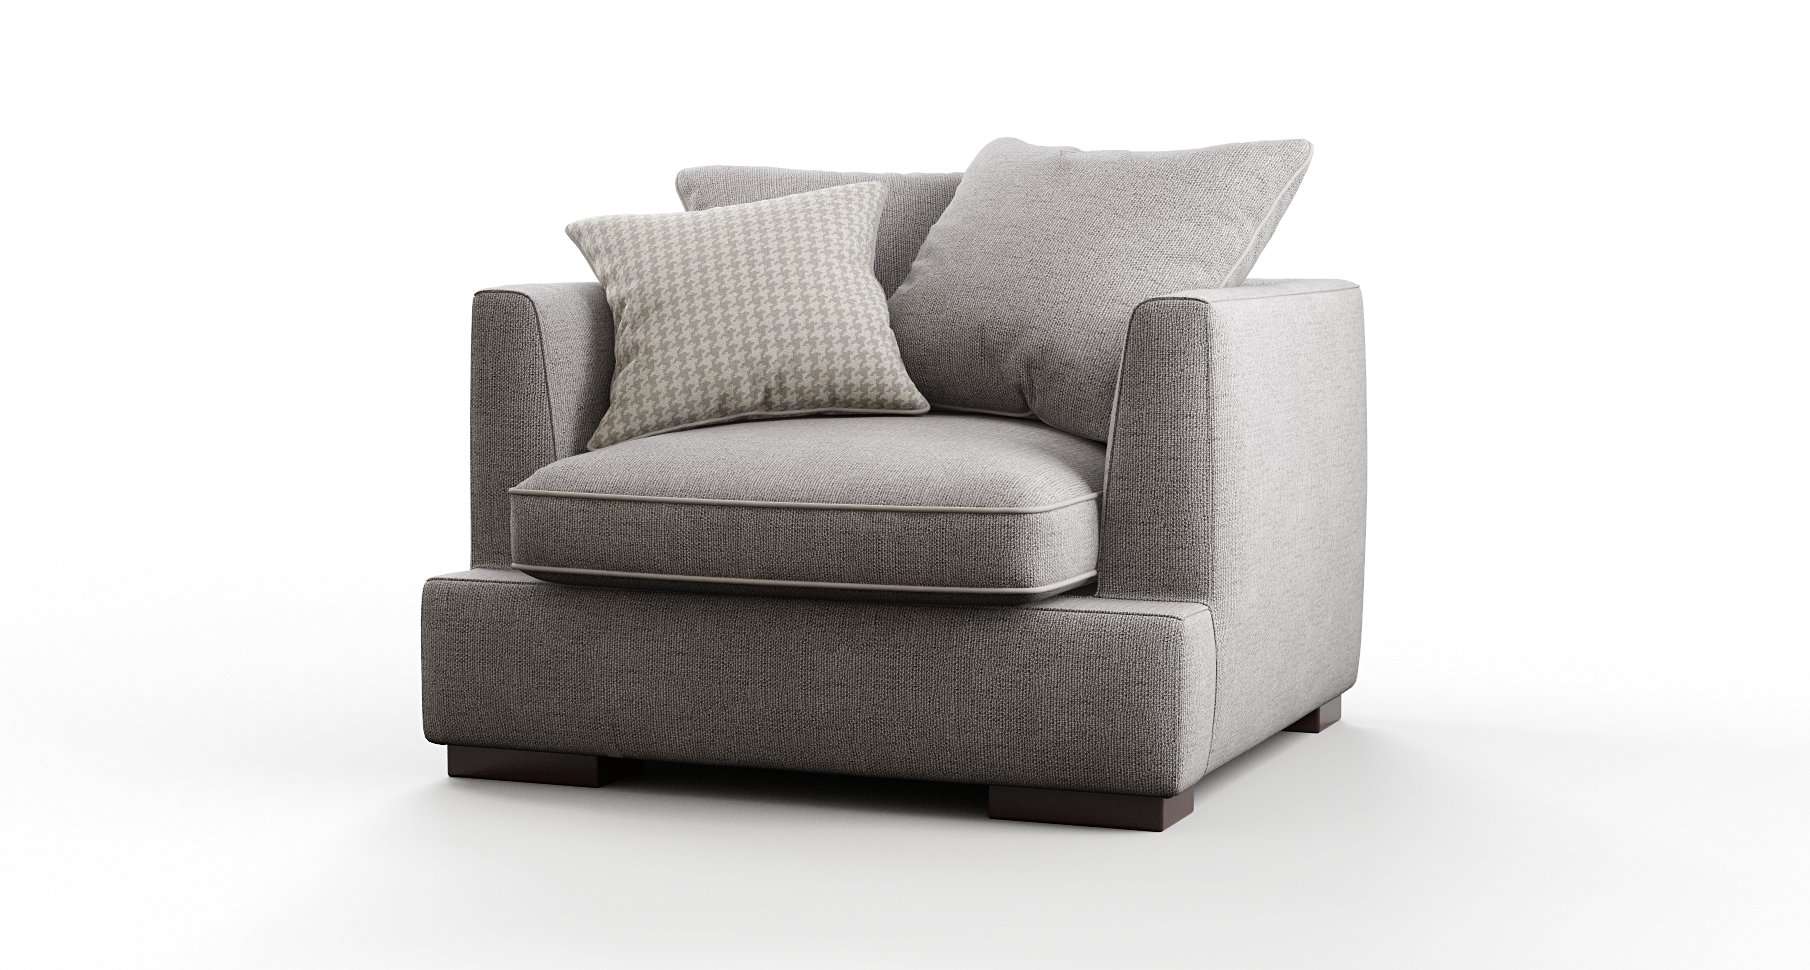 Ipsoni armchair